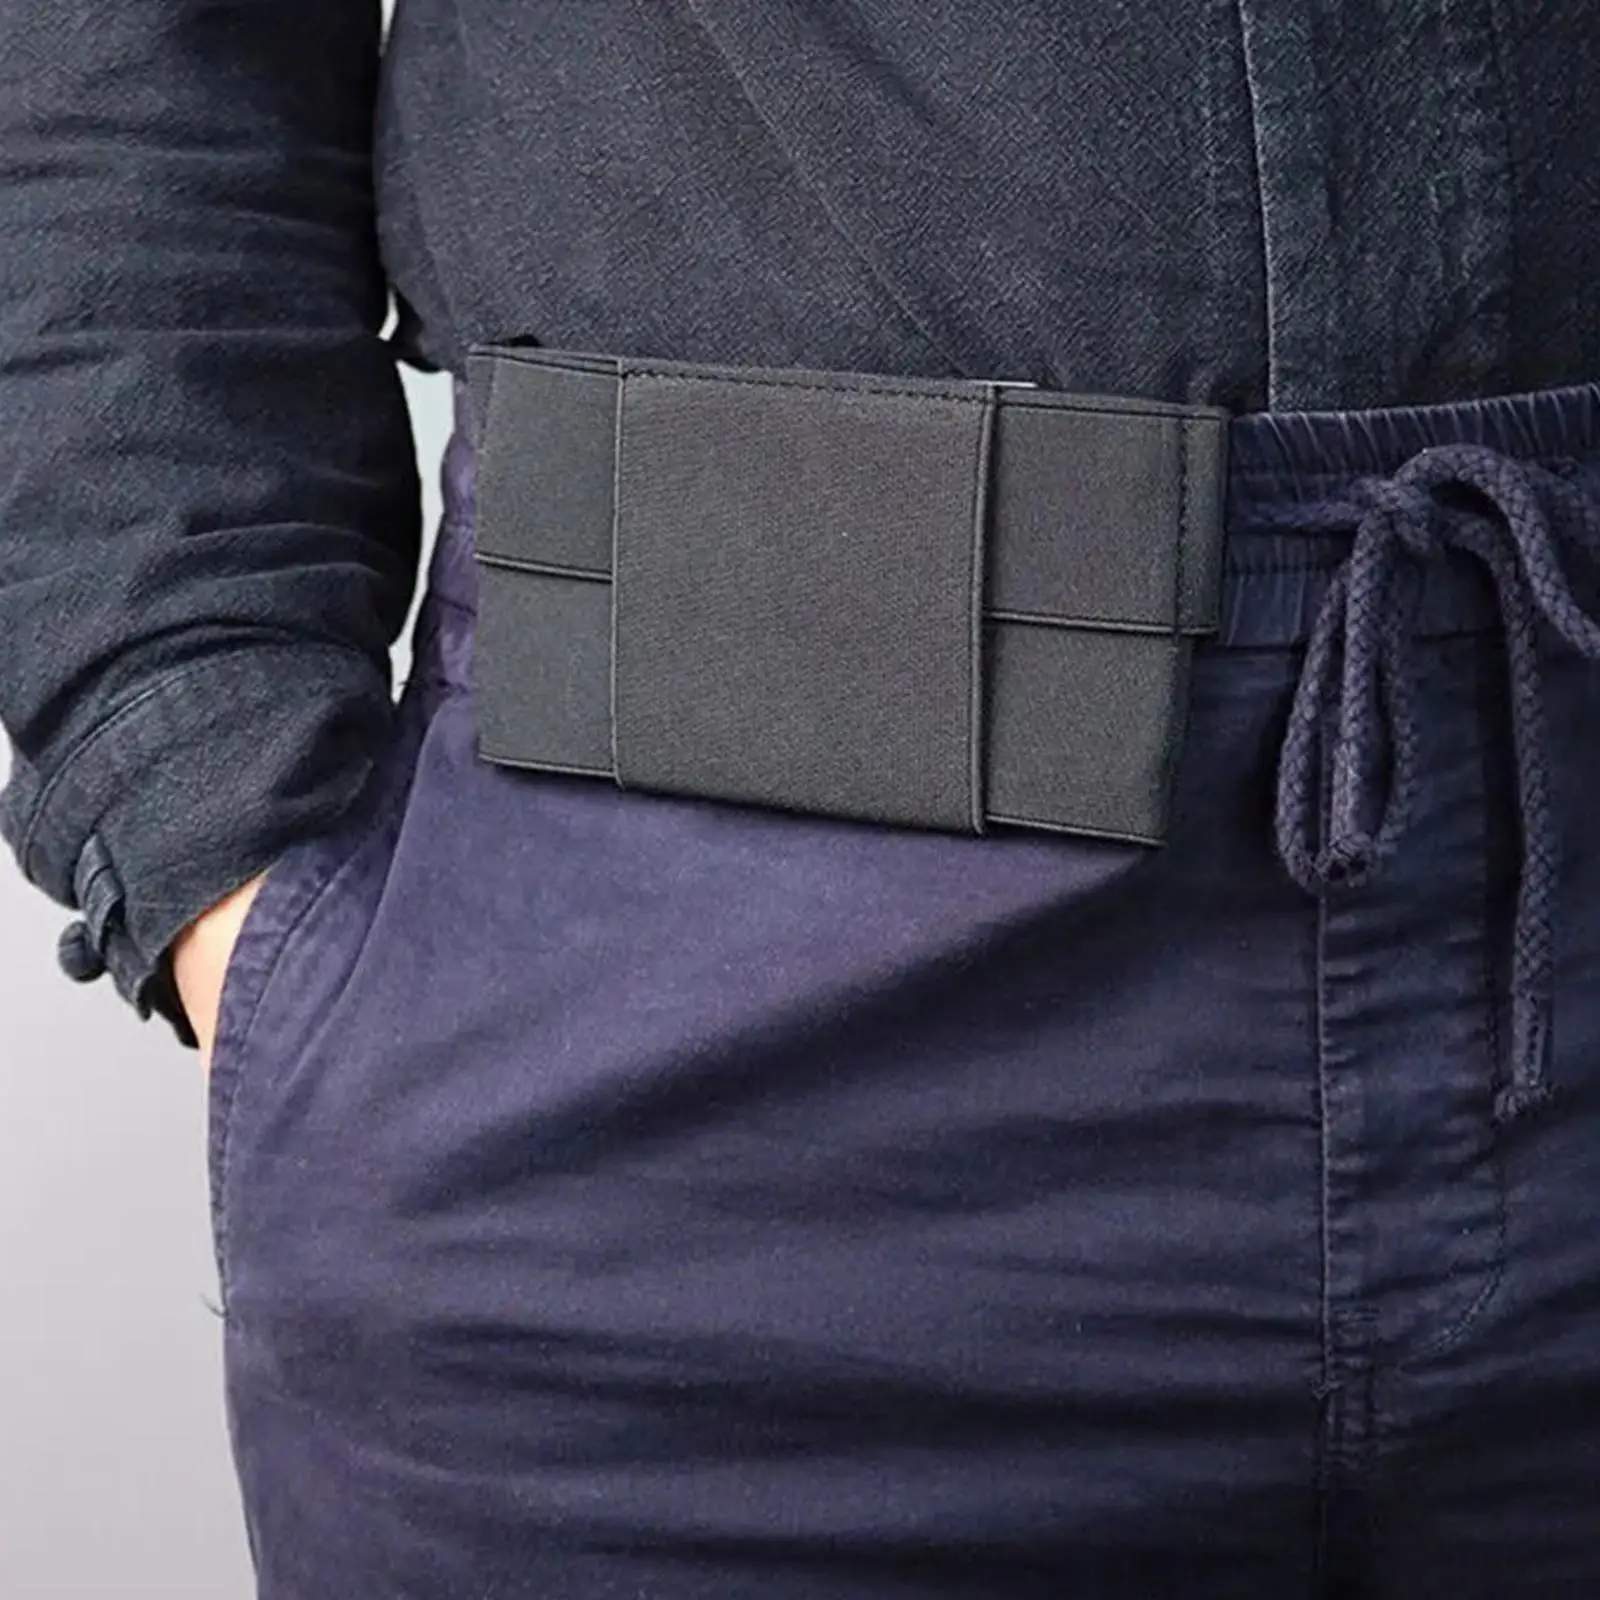 Invisible Wallet Waist Bag Clip on Phone Holder Minimalist Card Storage Bag